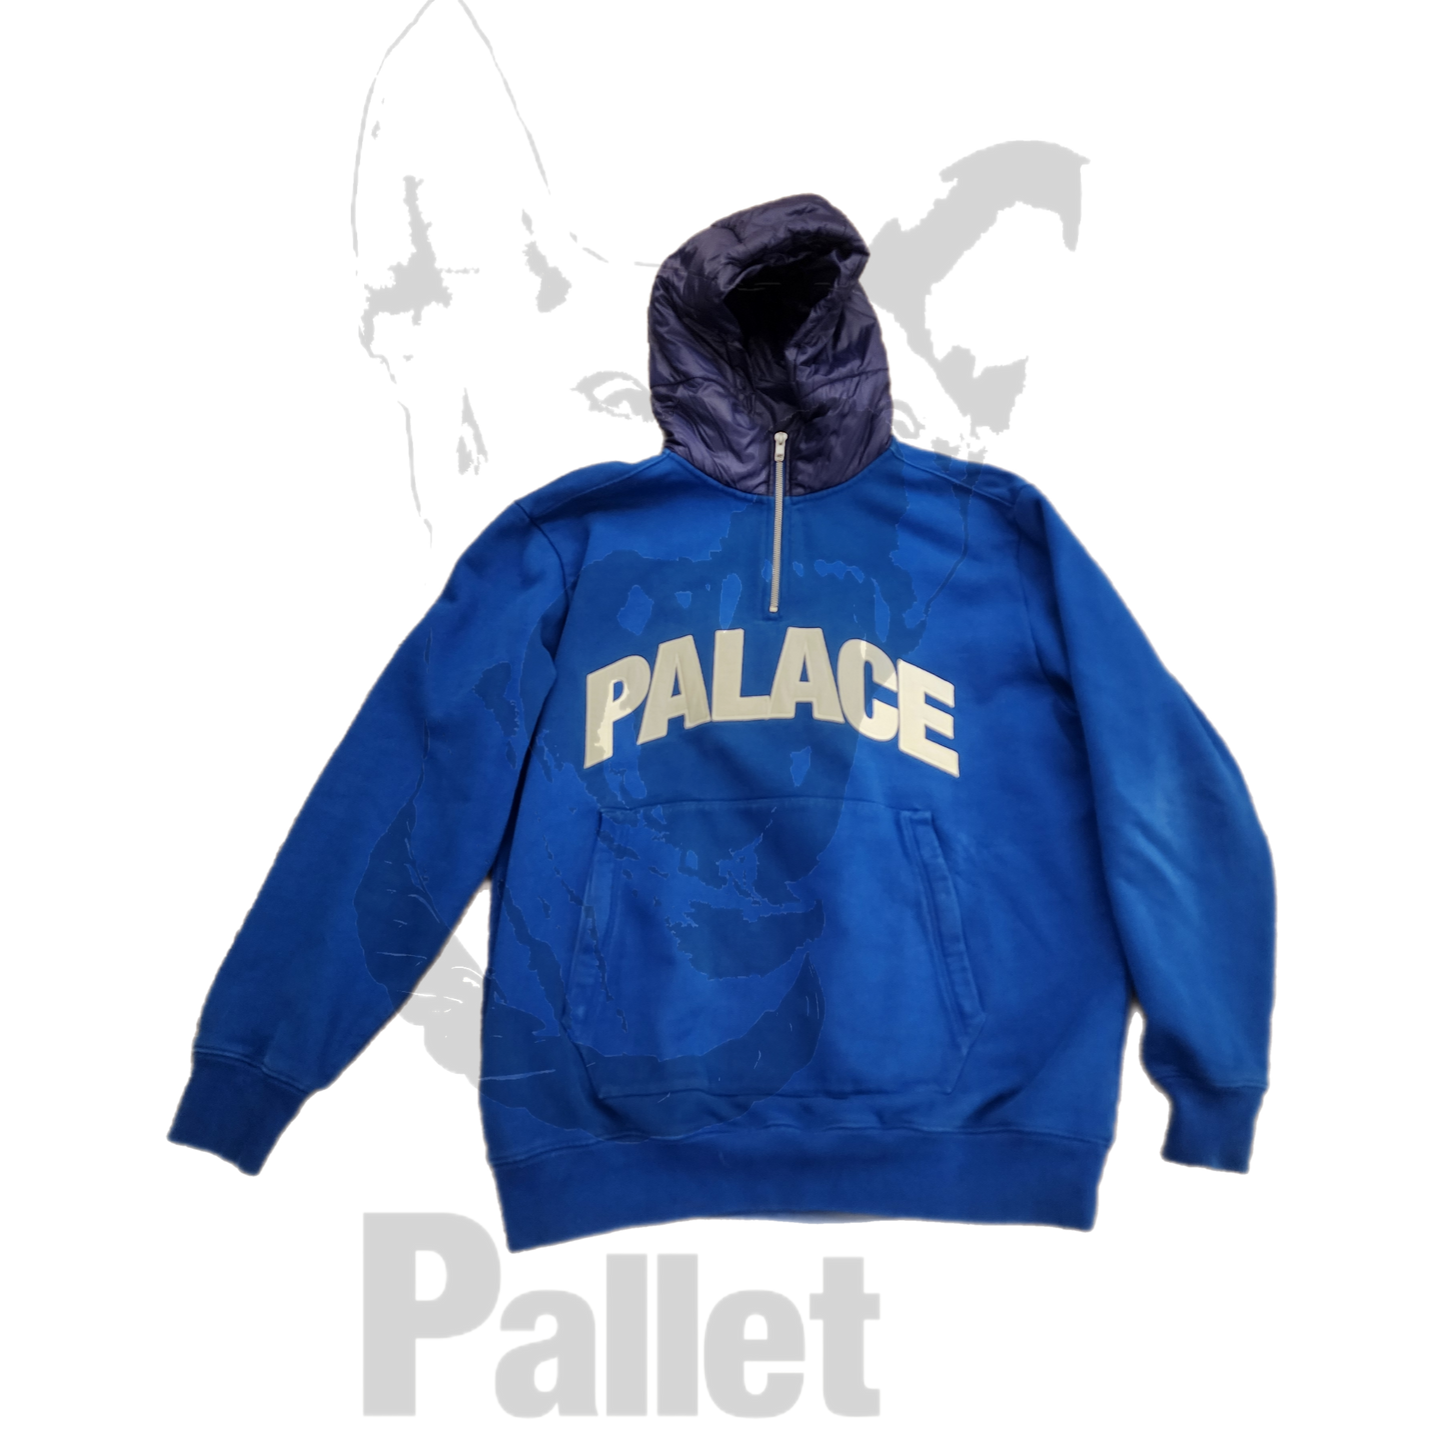 Palace - "Quater Zip Blue Hoodie" - Size X-Large